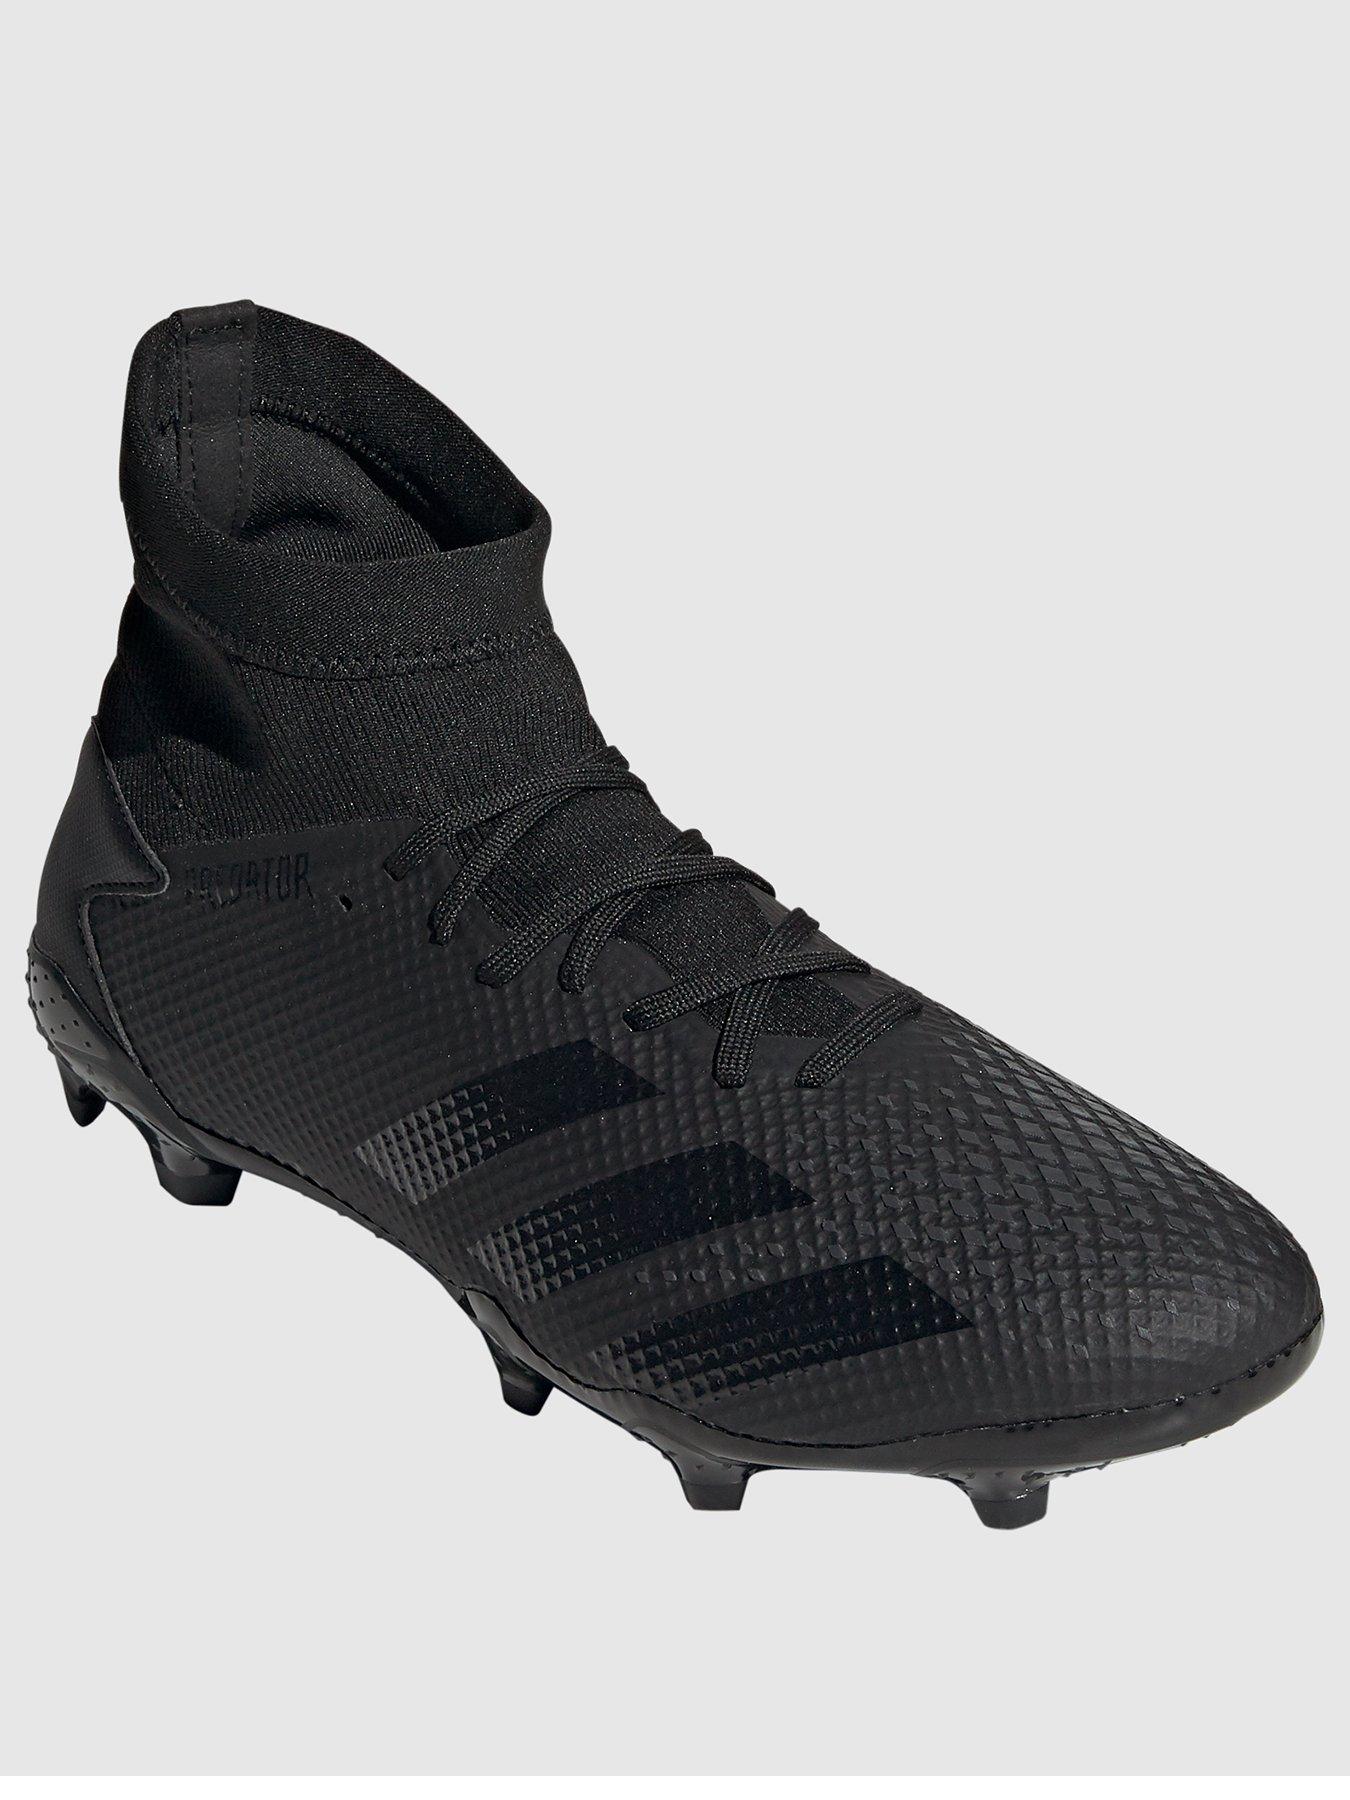 adidas astro turf football boots